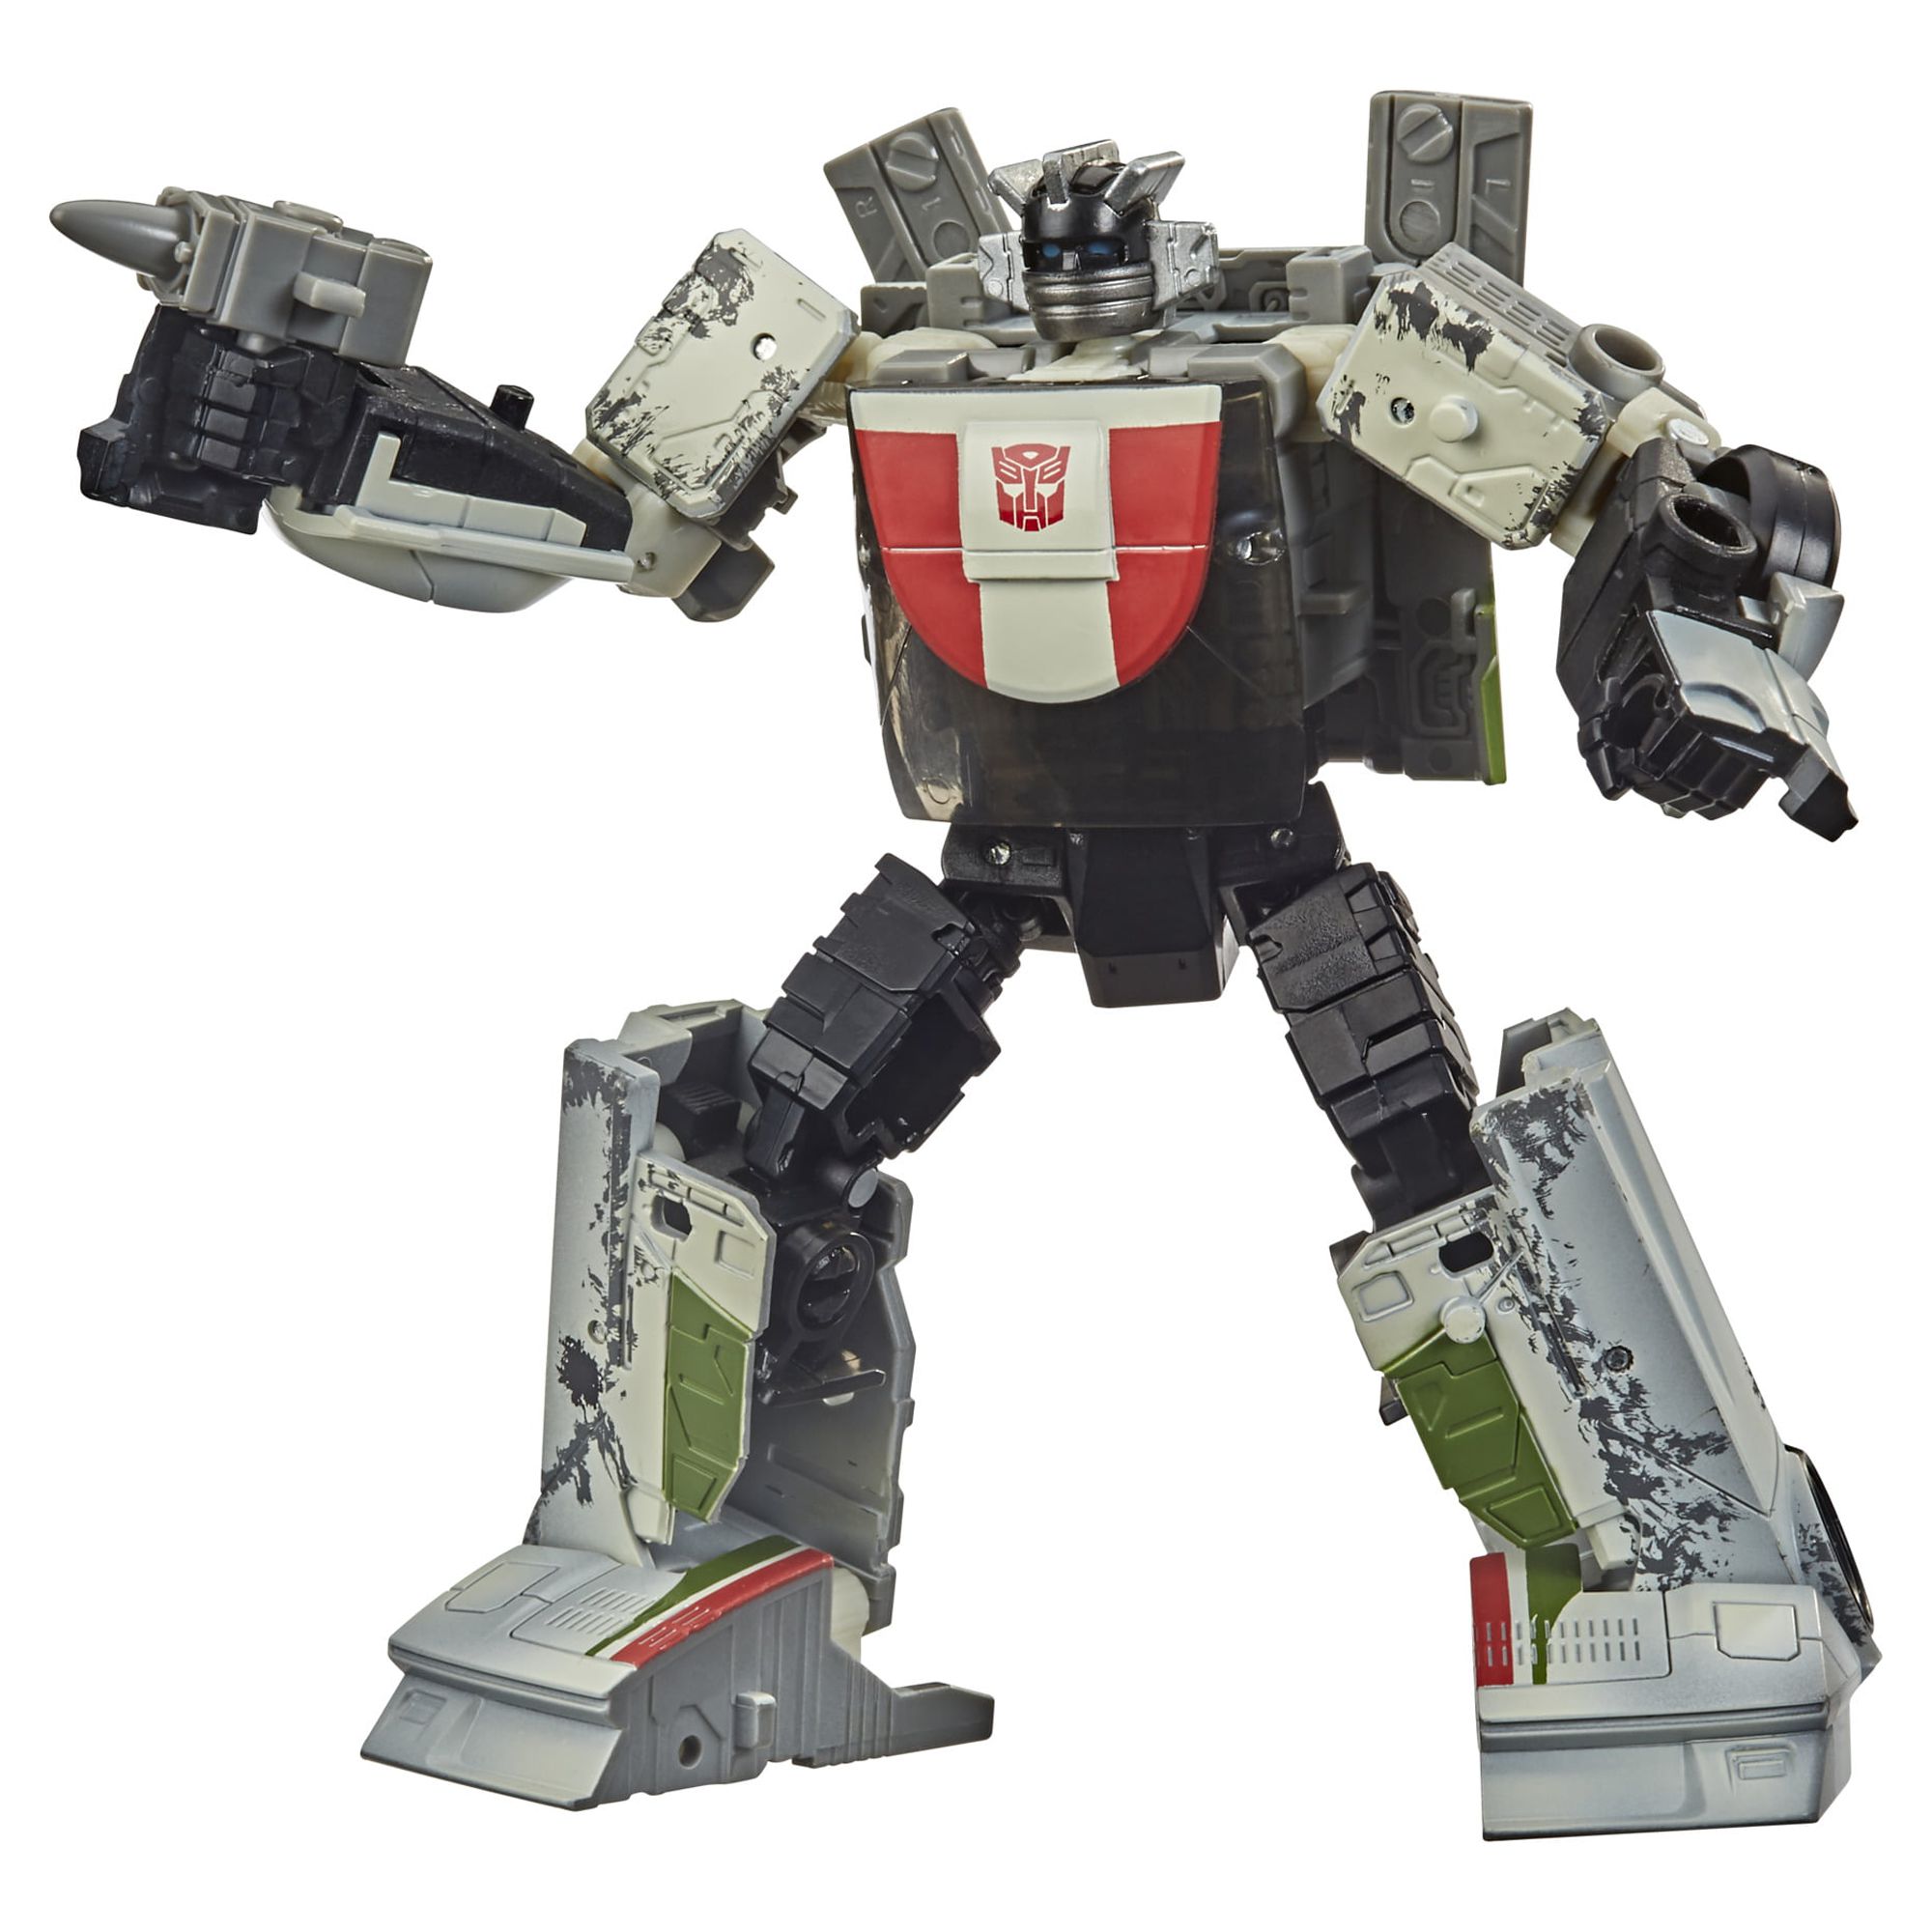 Transformers Generations War for Cybertron Series Deluxe Wheeljack, Walmart Exclusive - image 4 of 6